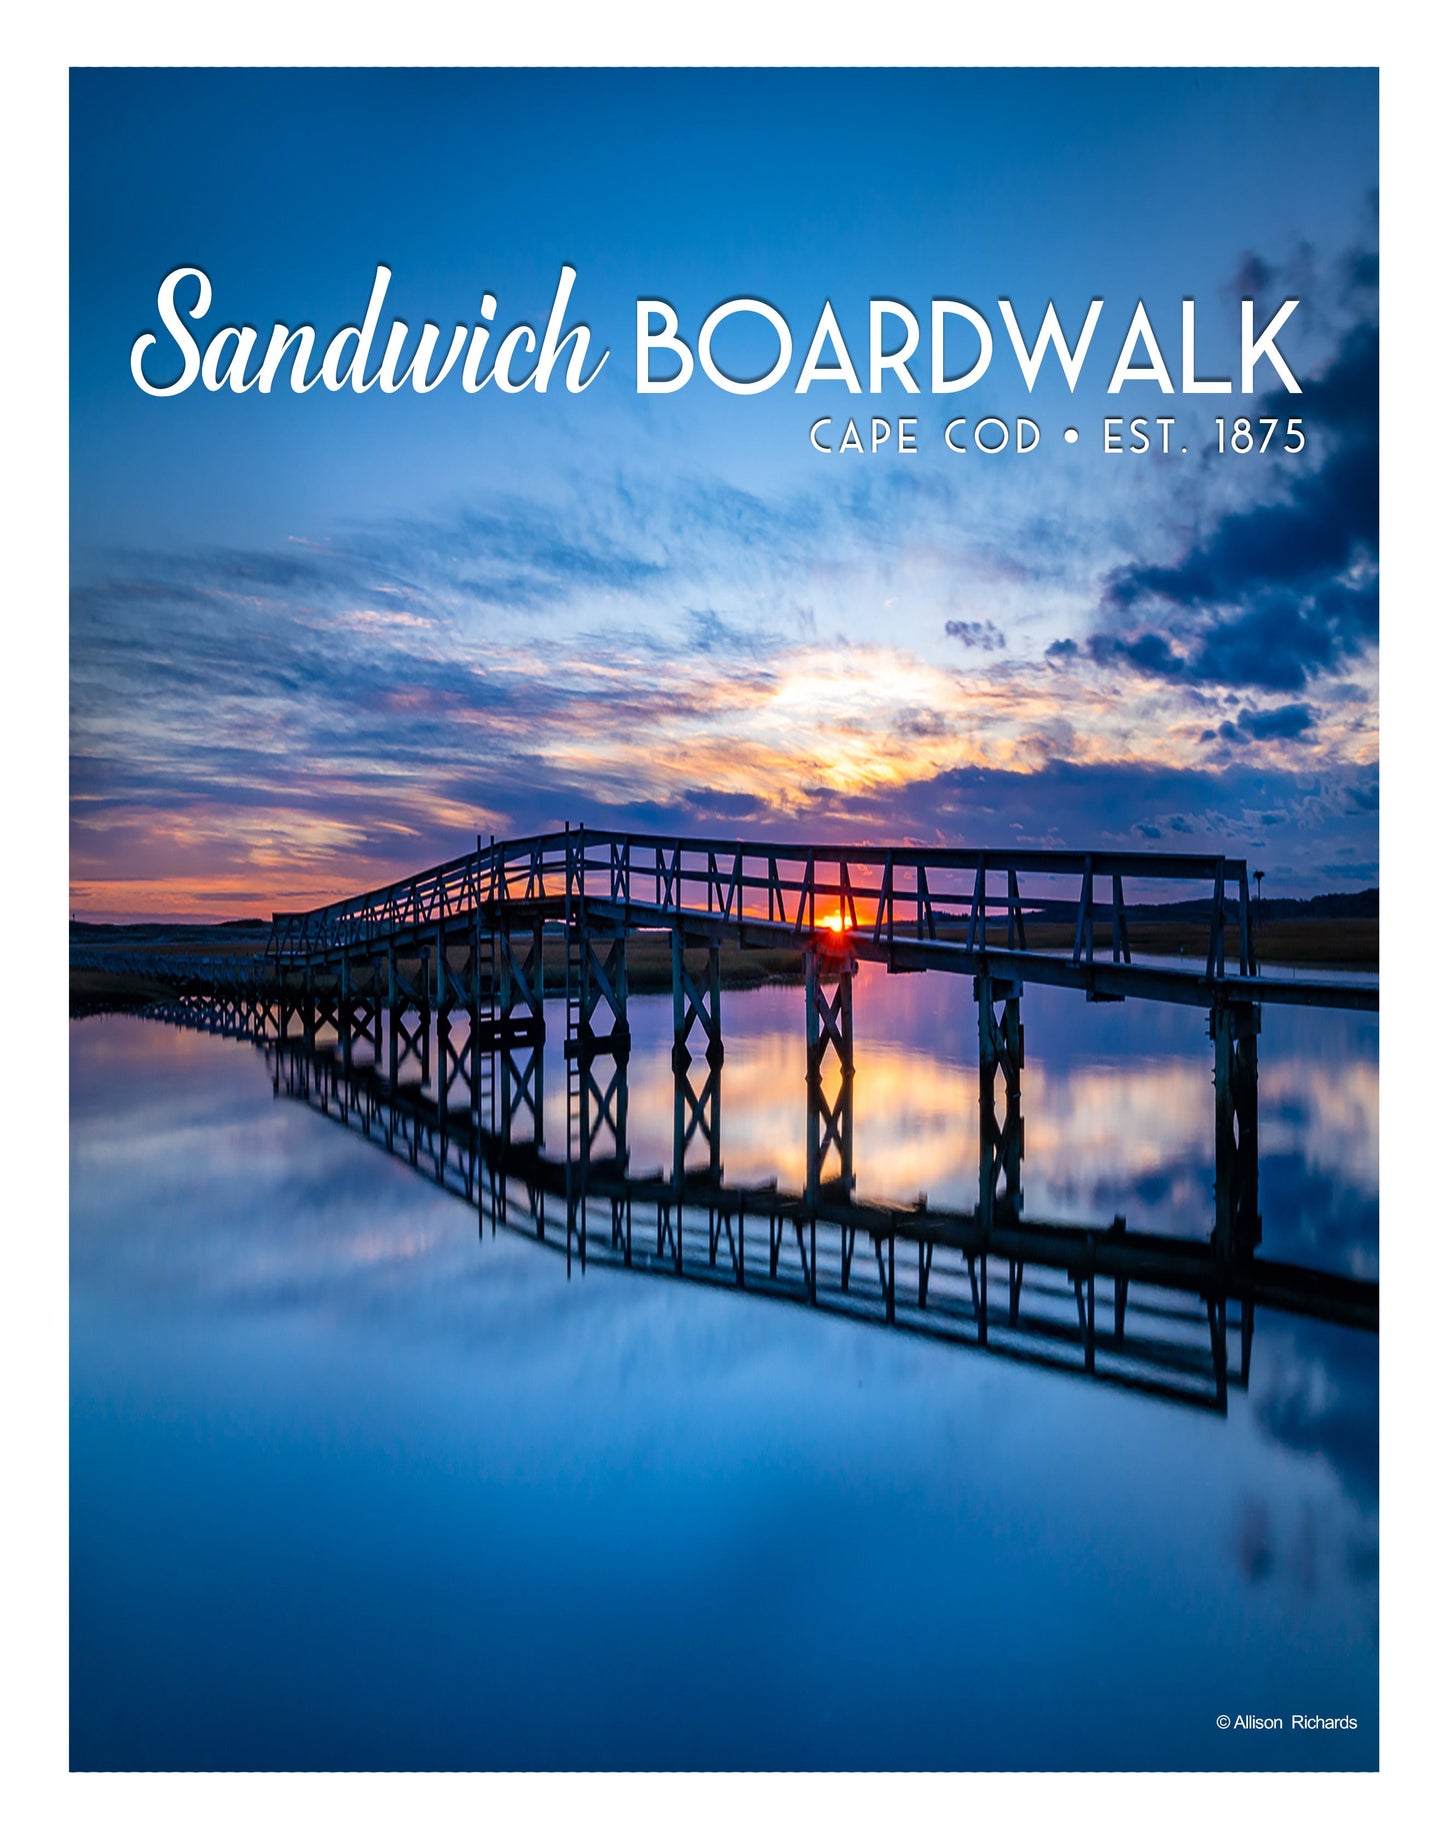 Sandwich Boardwalk Poster - Allie Richards Photography